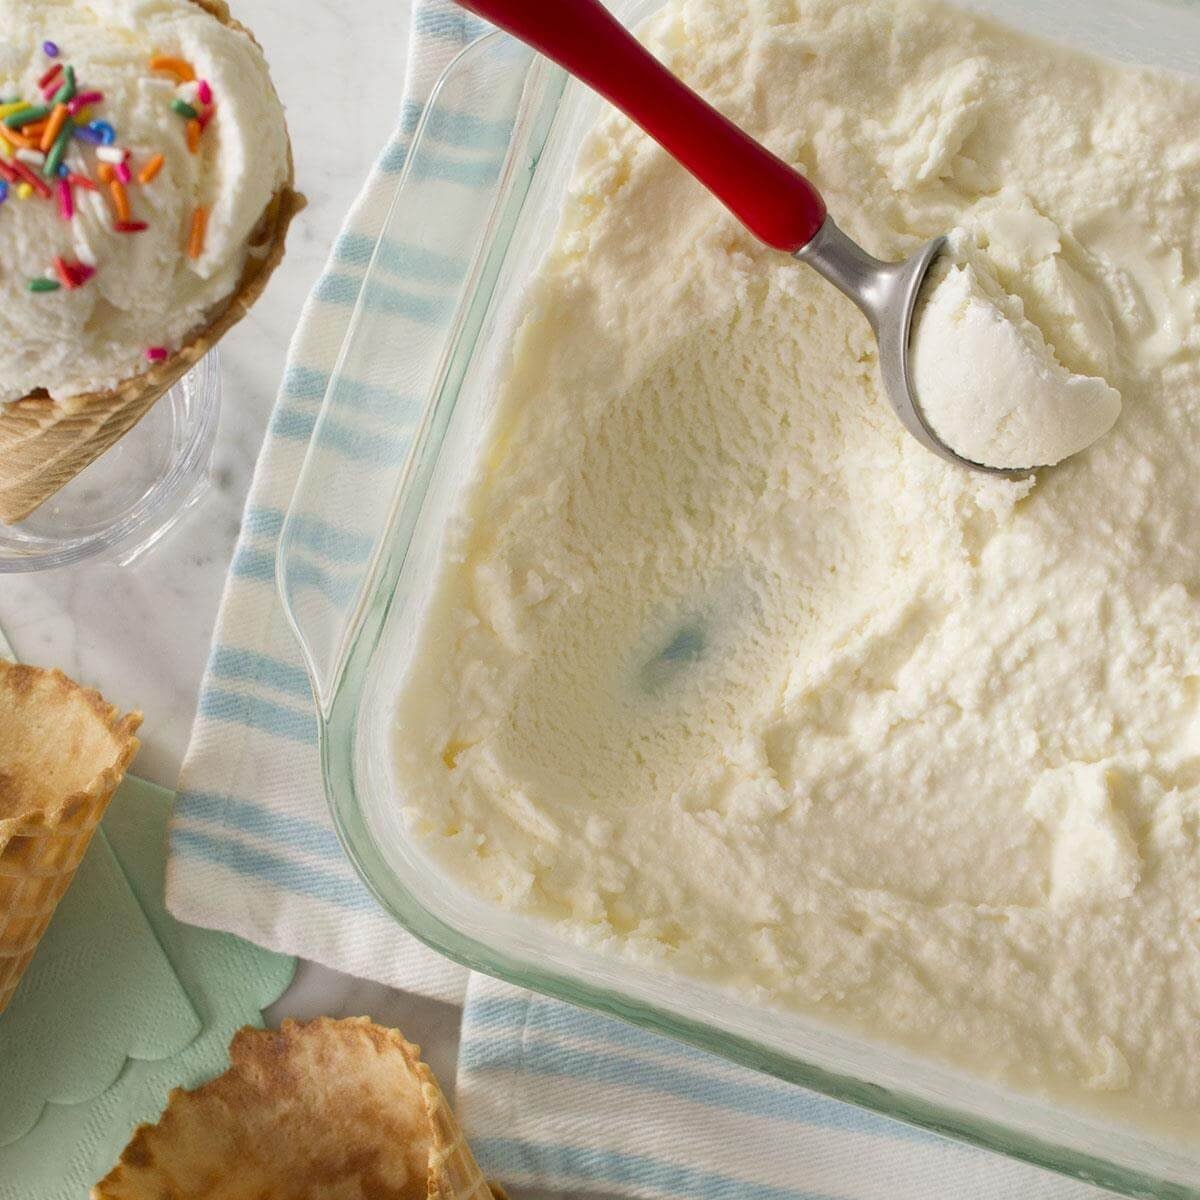 28 Gluten-Free Ice Creams, Slushes and Sorbets